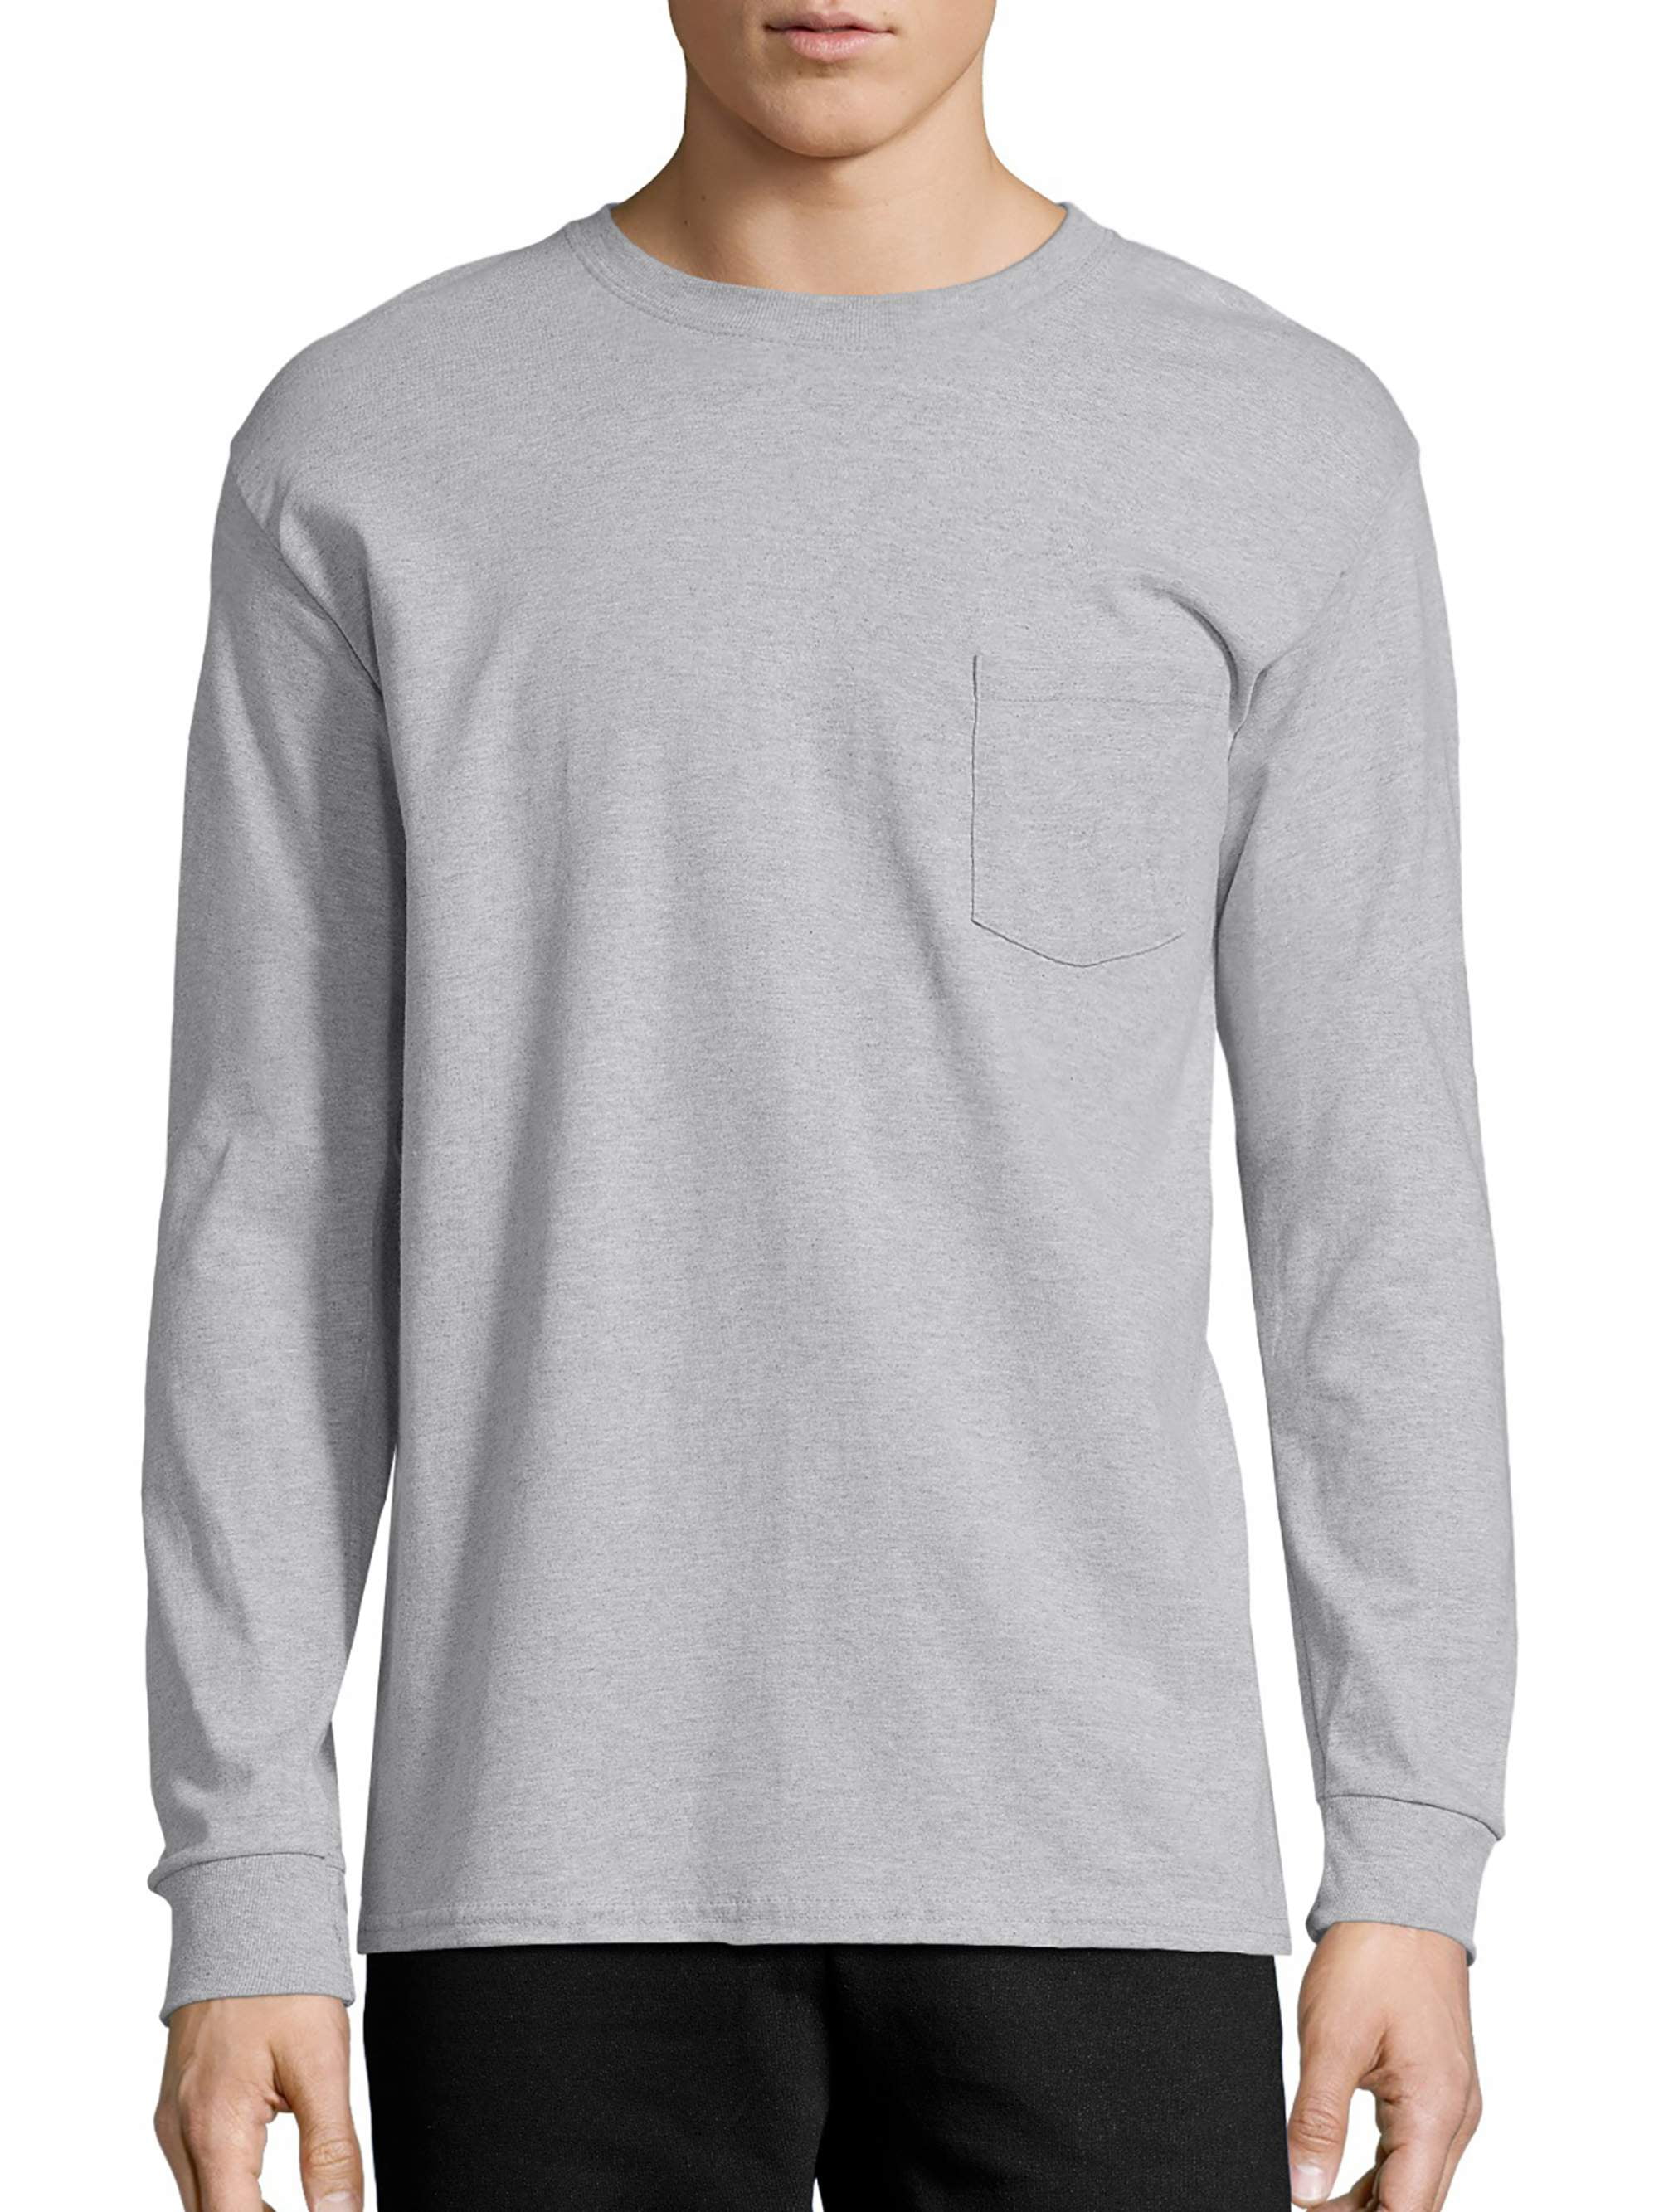 YUNY Mens Casual Button Turn-Down Collar Long Sleeve Pocket T-Shirts Shirts AS1 2XL